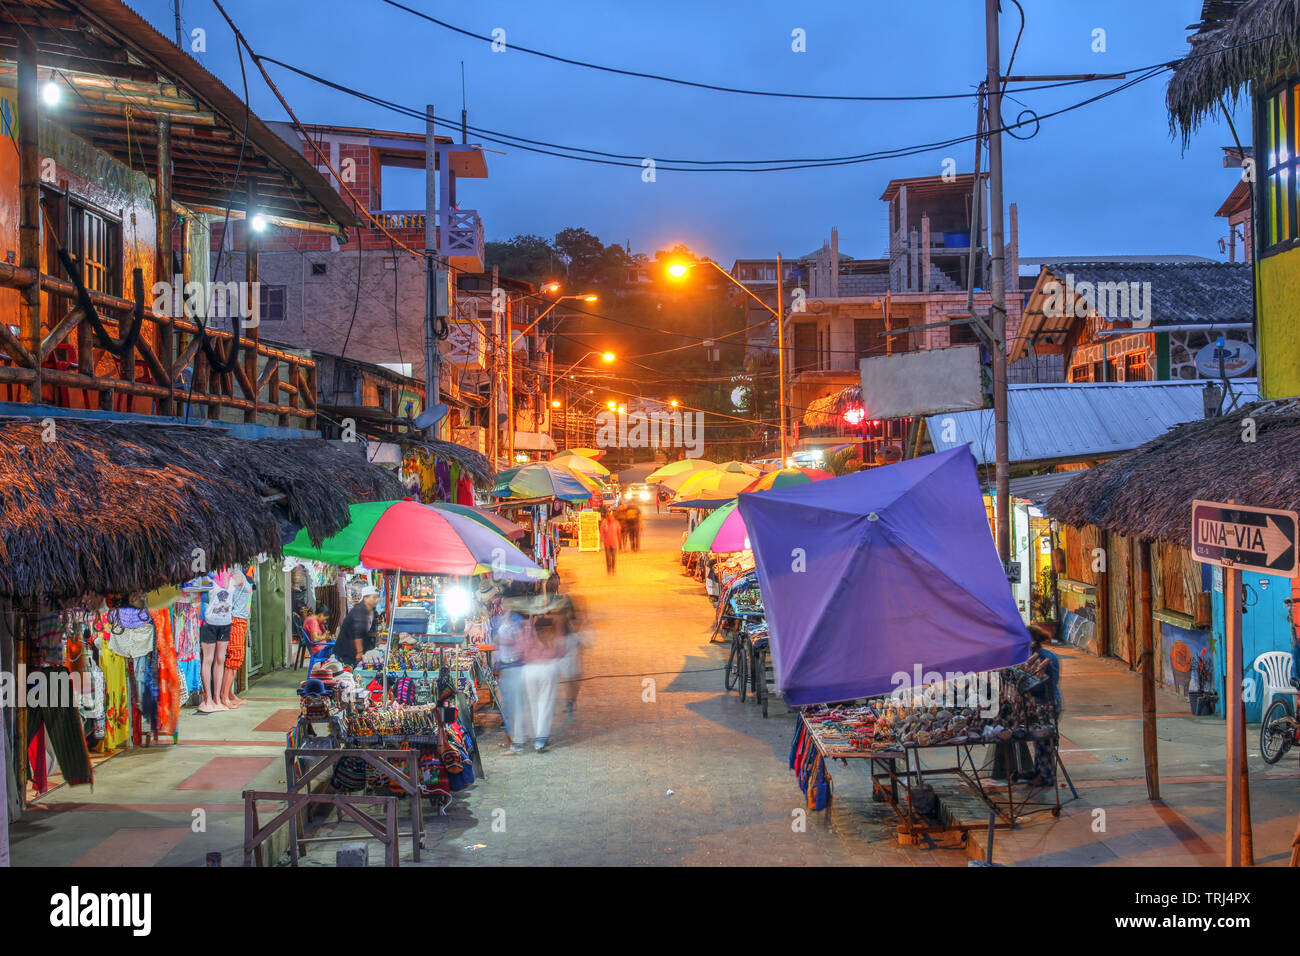 Night scene with street market in the small resort town of Montanita, Ecuador Stock Photo